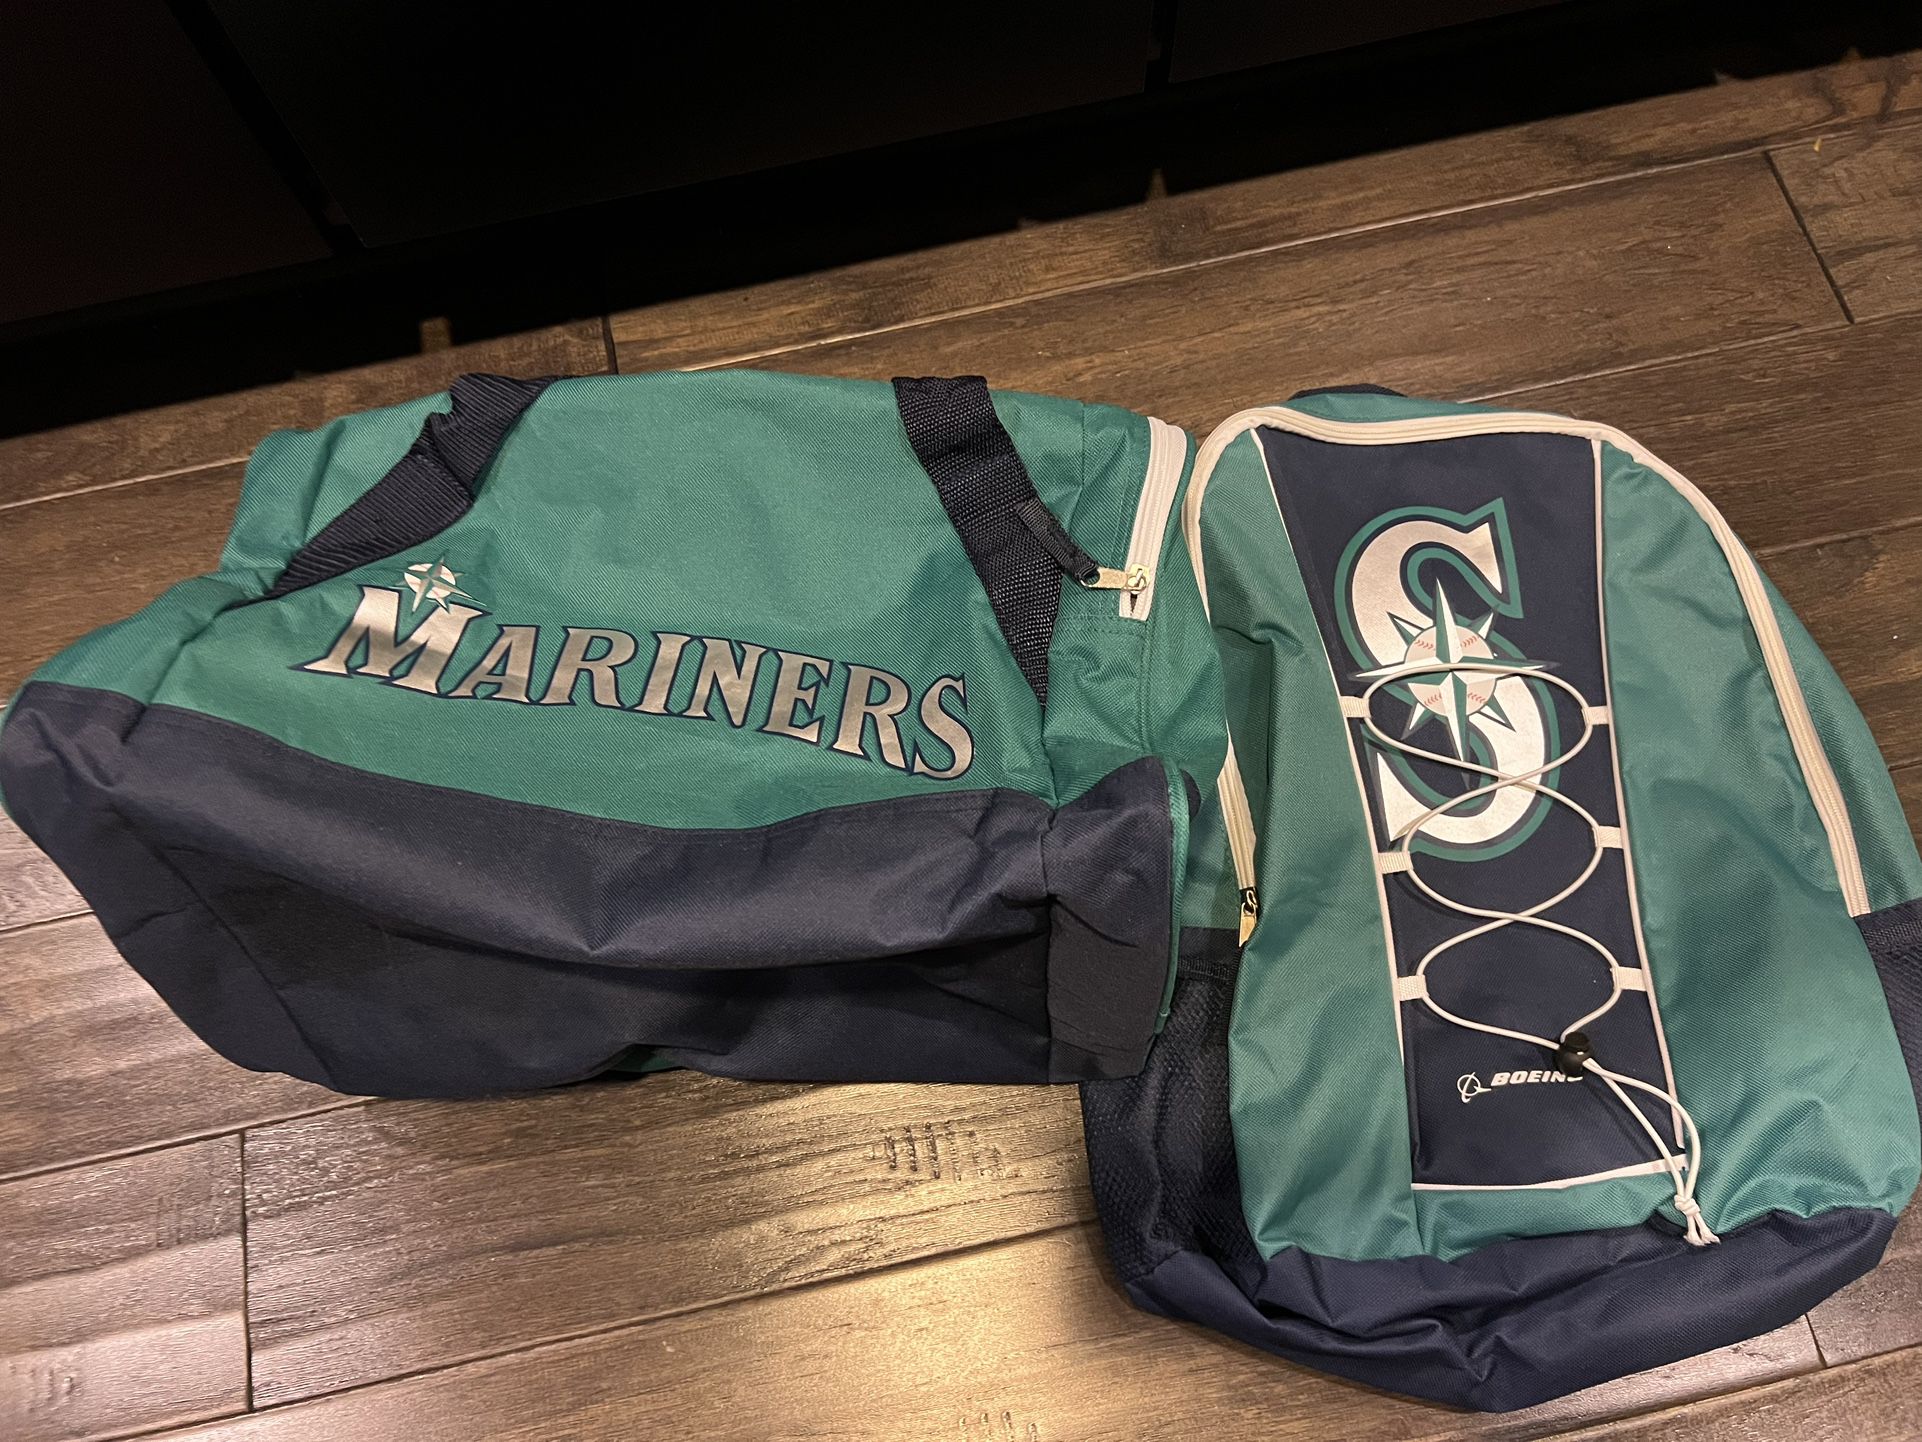 Mariners Duffle Bag And Backpack